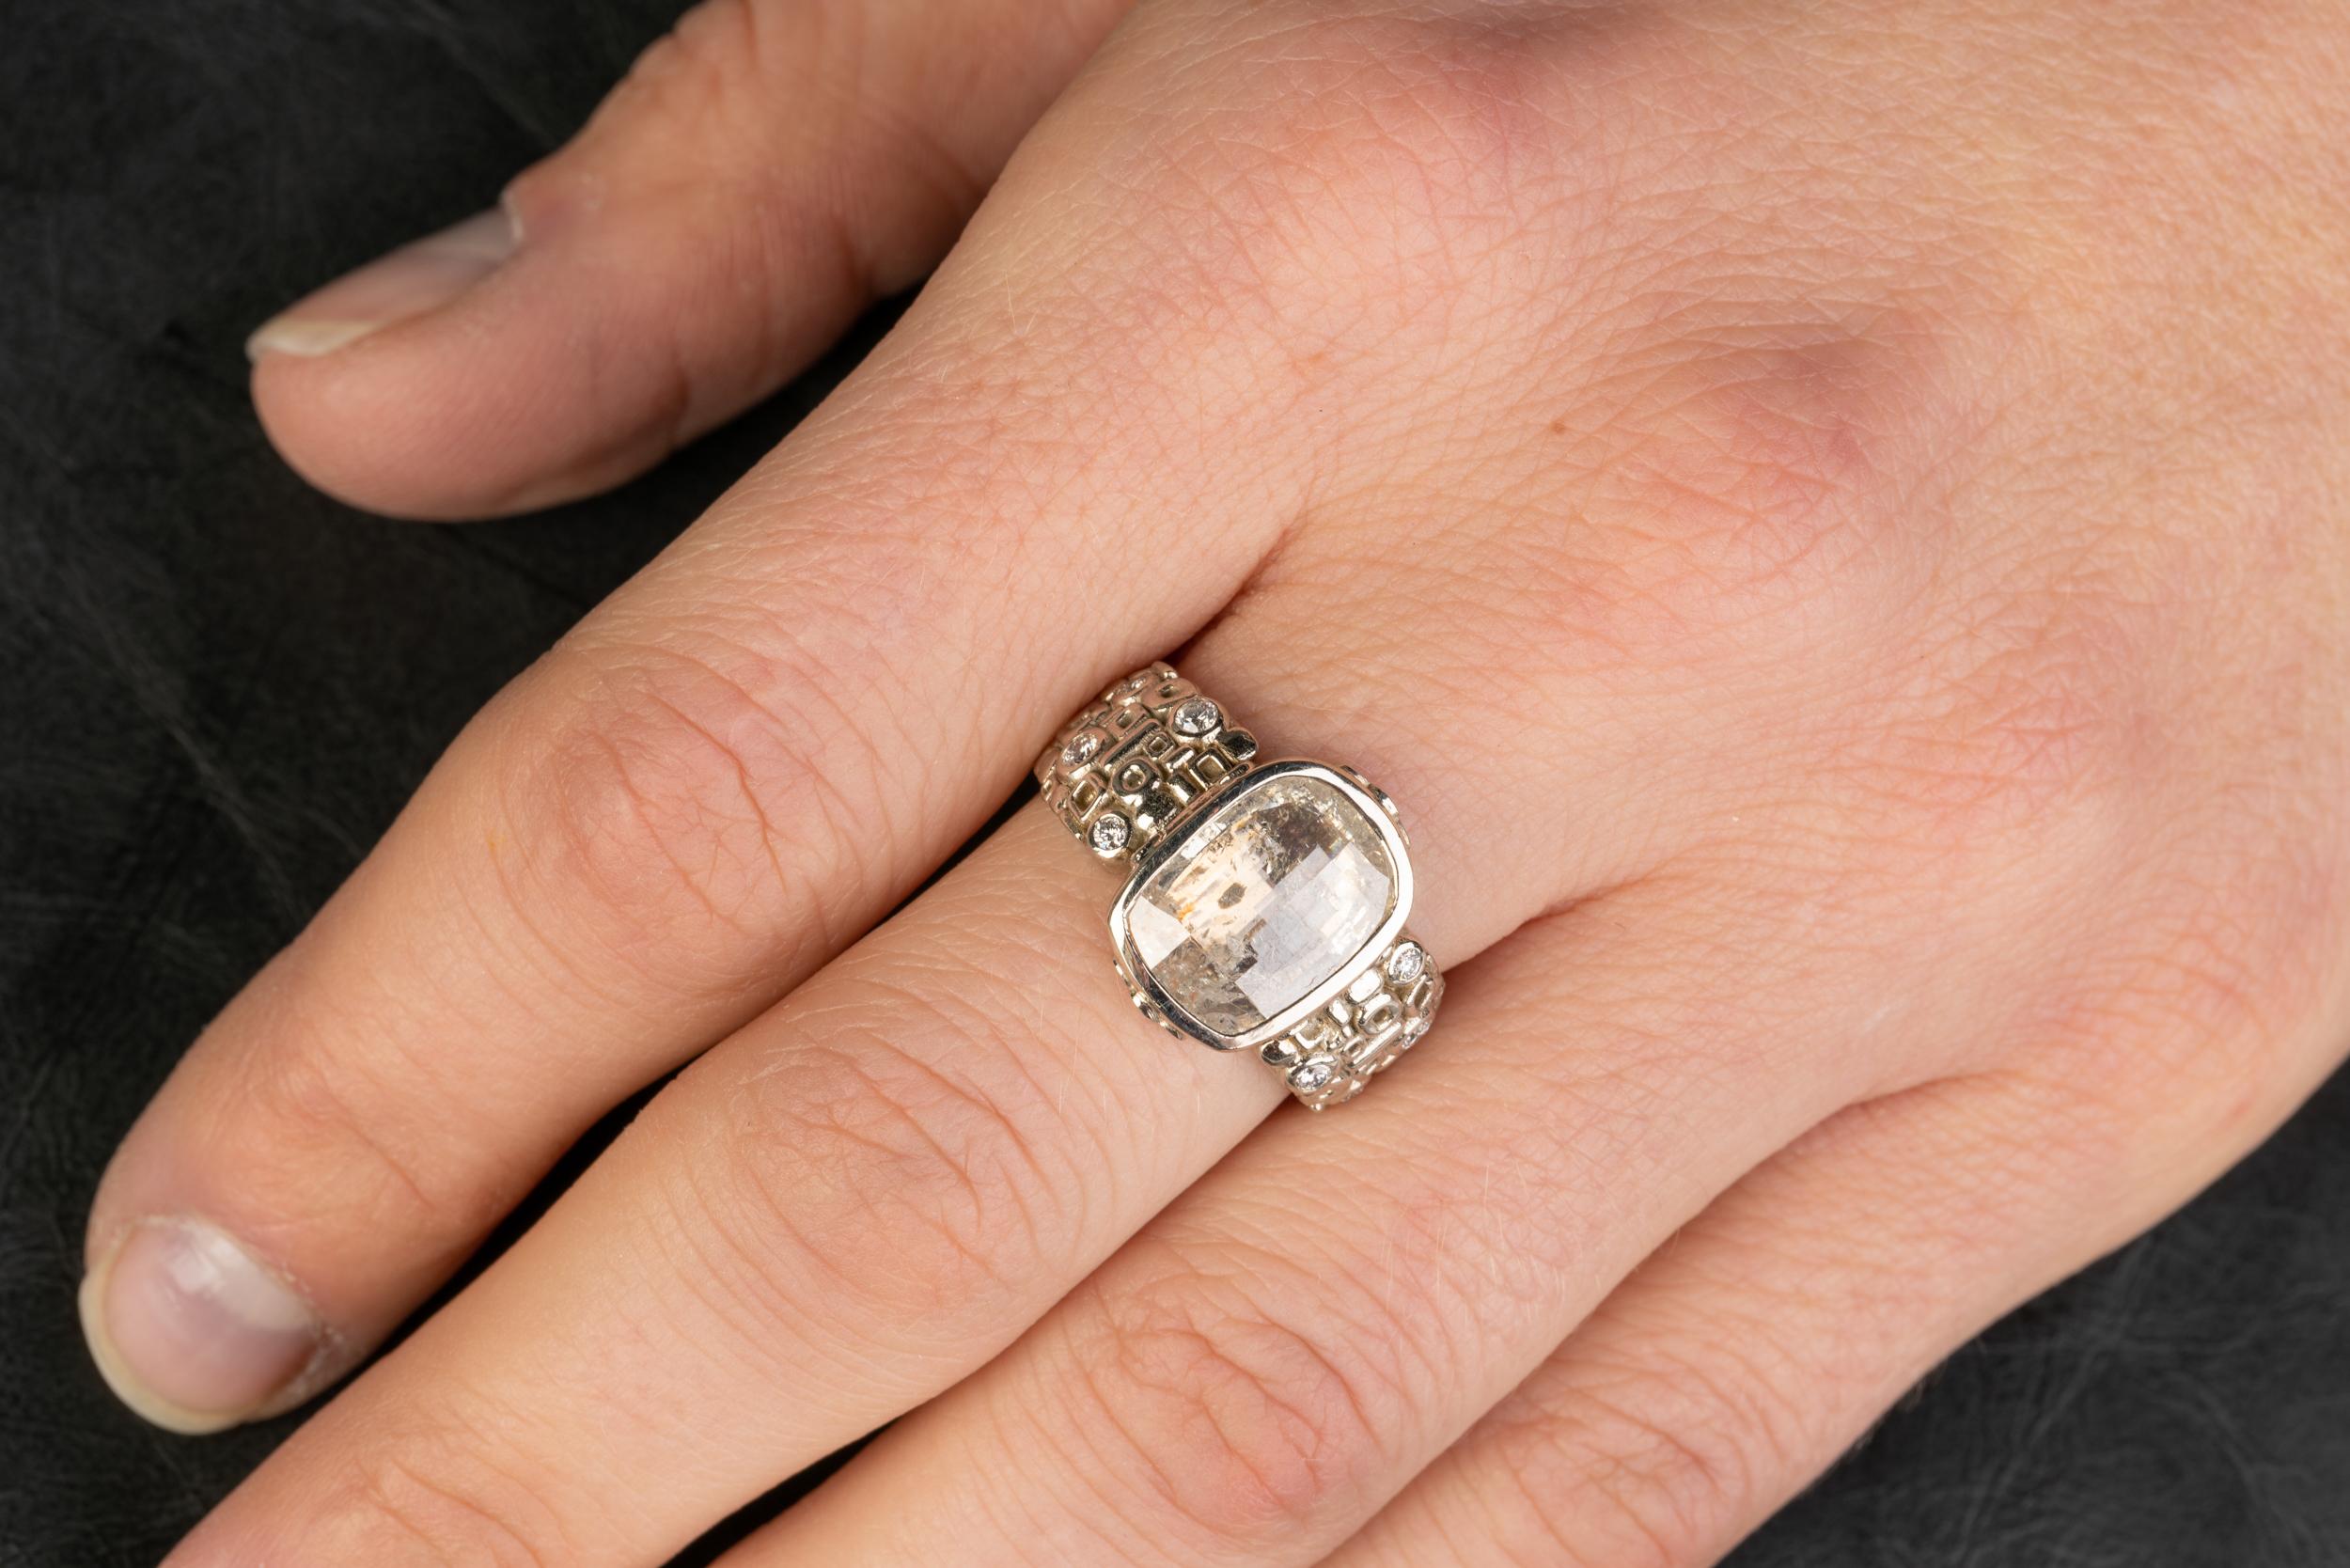 18 Karat White Gold 2.41 Carat Rose Cut Diamond Ring with White Diamonds For Sale 1